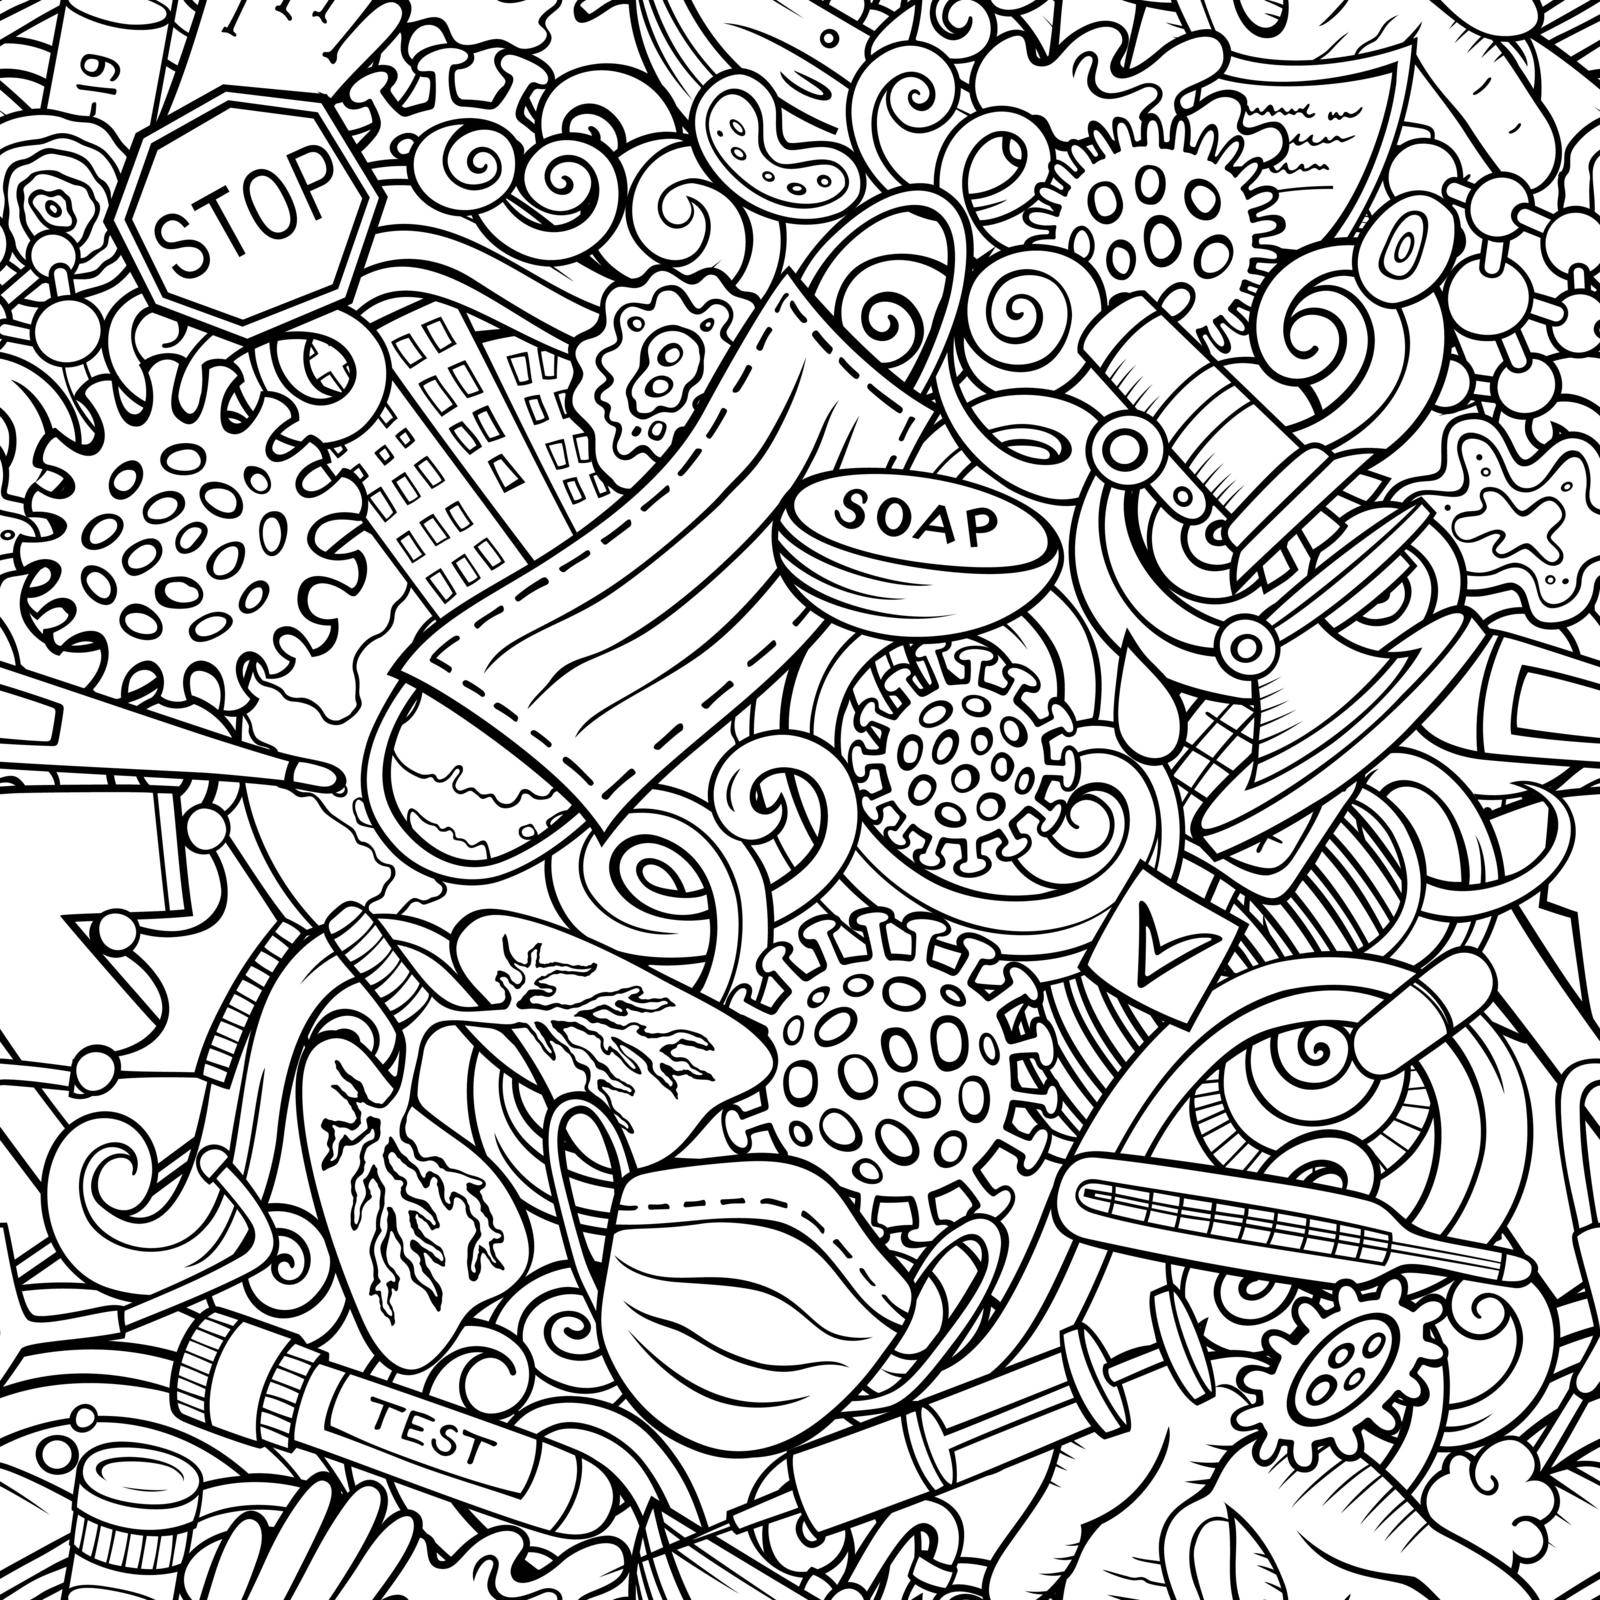 Cartoon cute doodles hand drawn Epidemic seamless pattern. by balabolka